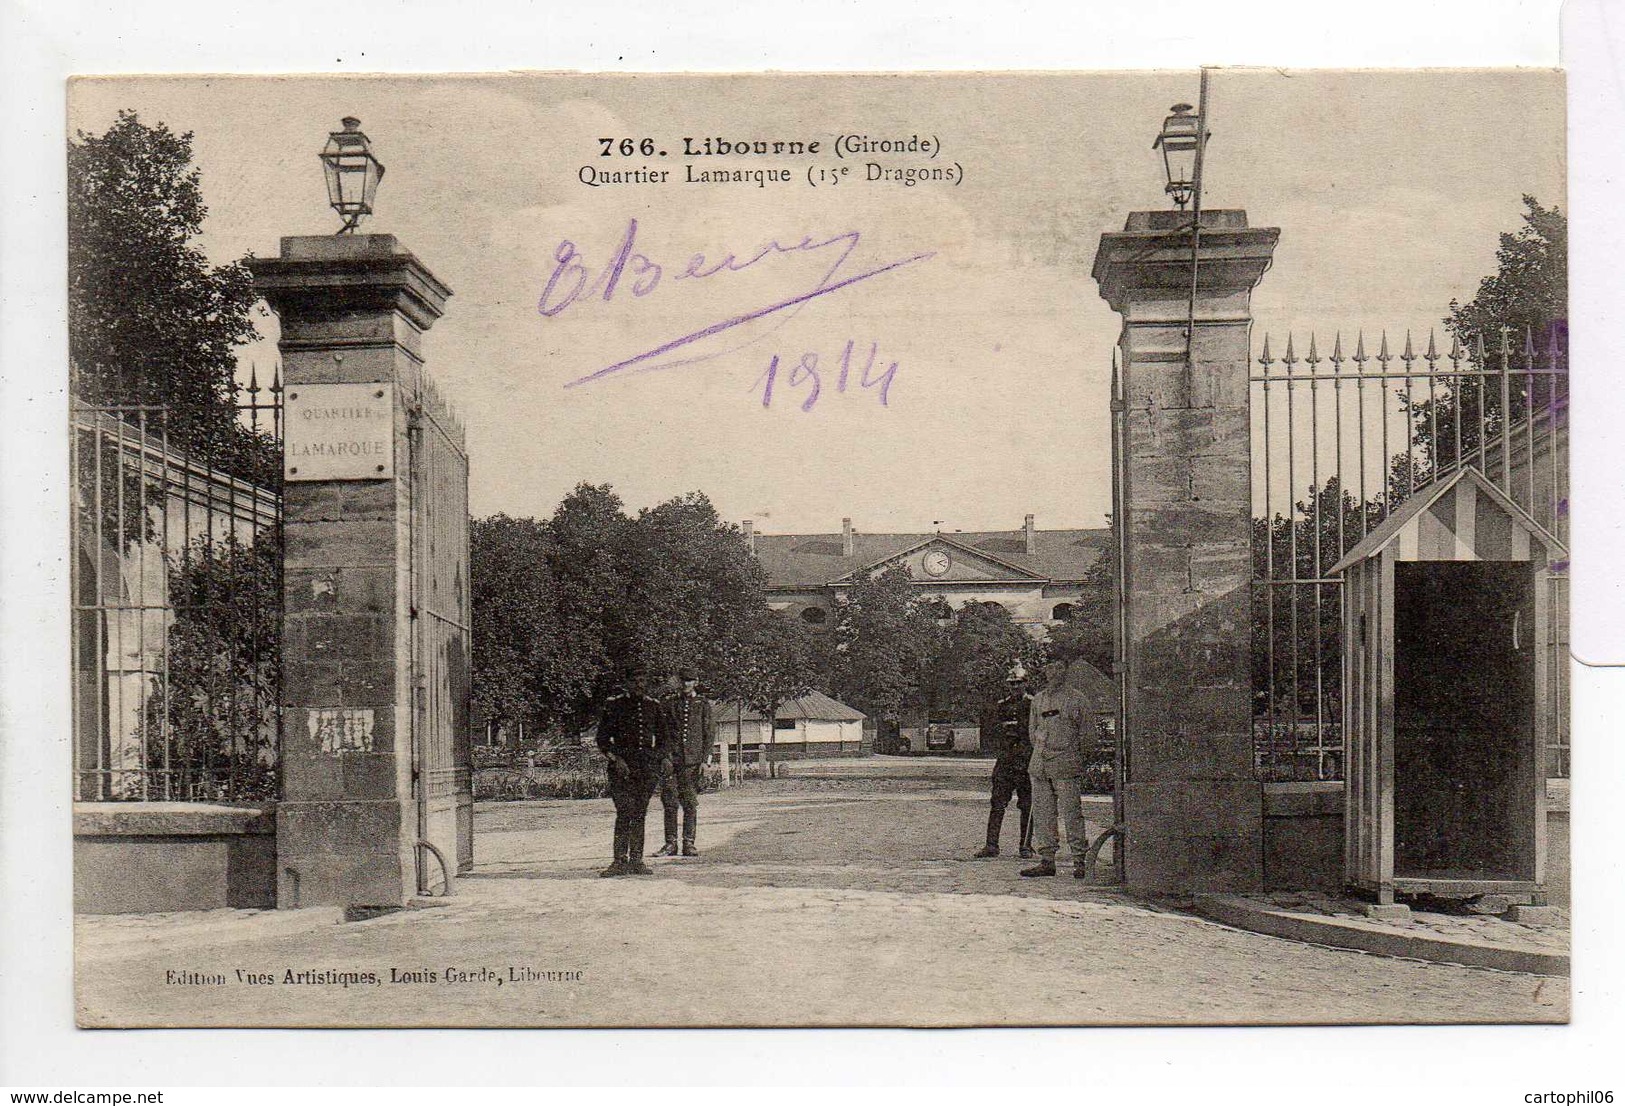 - CPA LIBOURNE (33) - Quartier Lamarque 1914 (15e Dragons) - Edition Louis Garde 766 - - Libourne